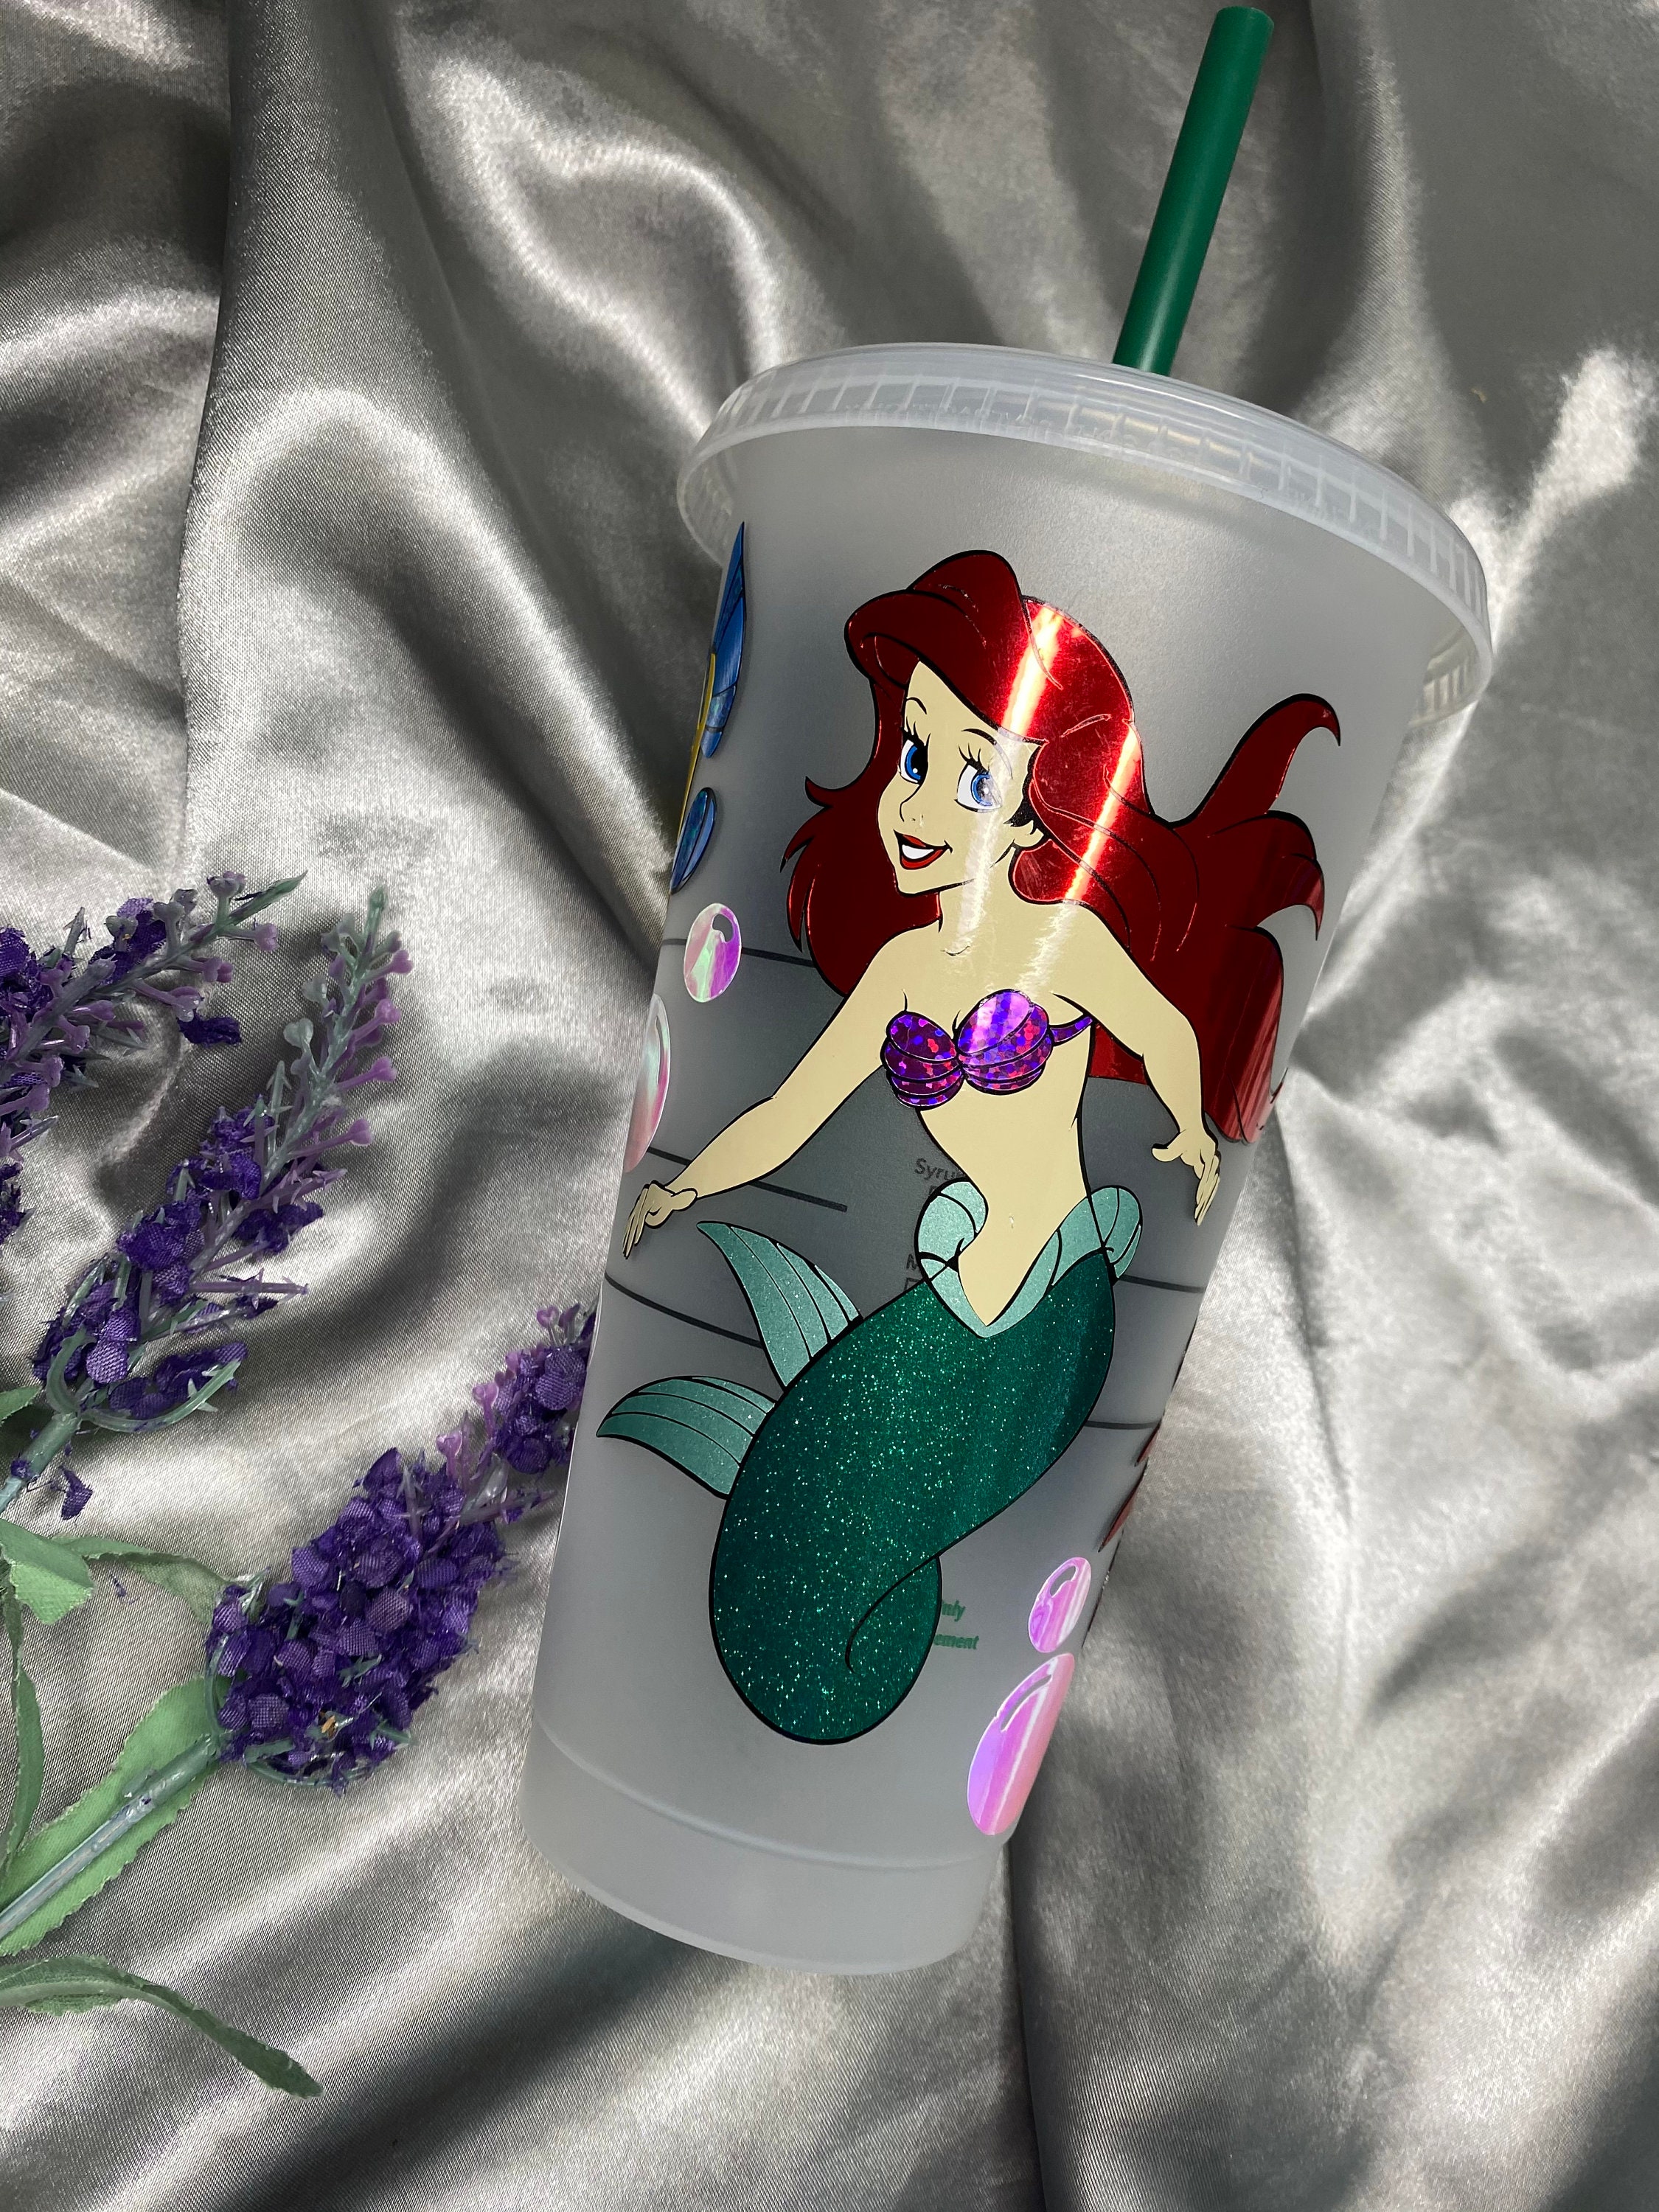 Little Mermaid Cup, Ariel-sebastian-flounder Custom Cup 